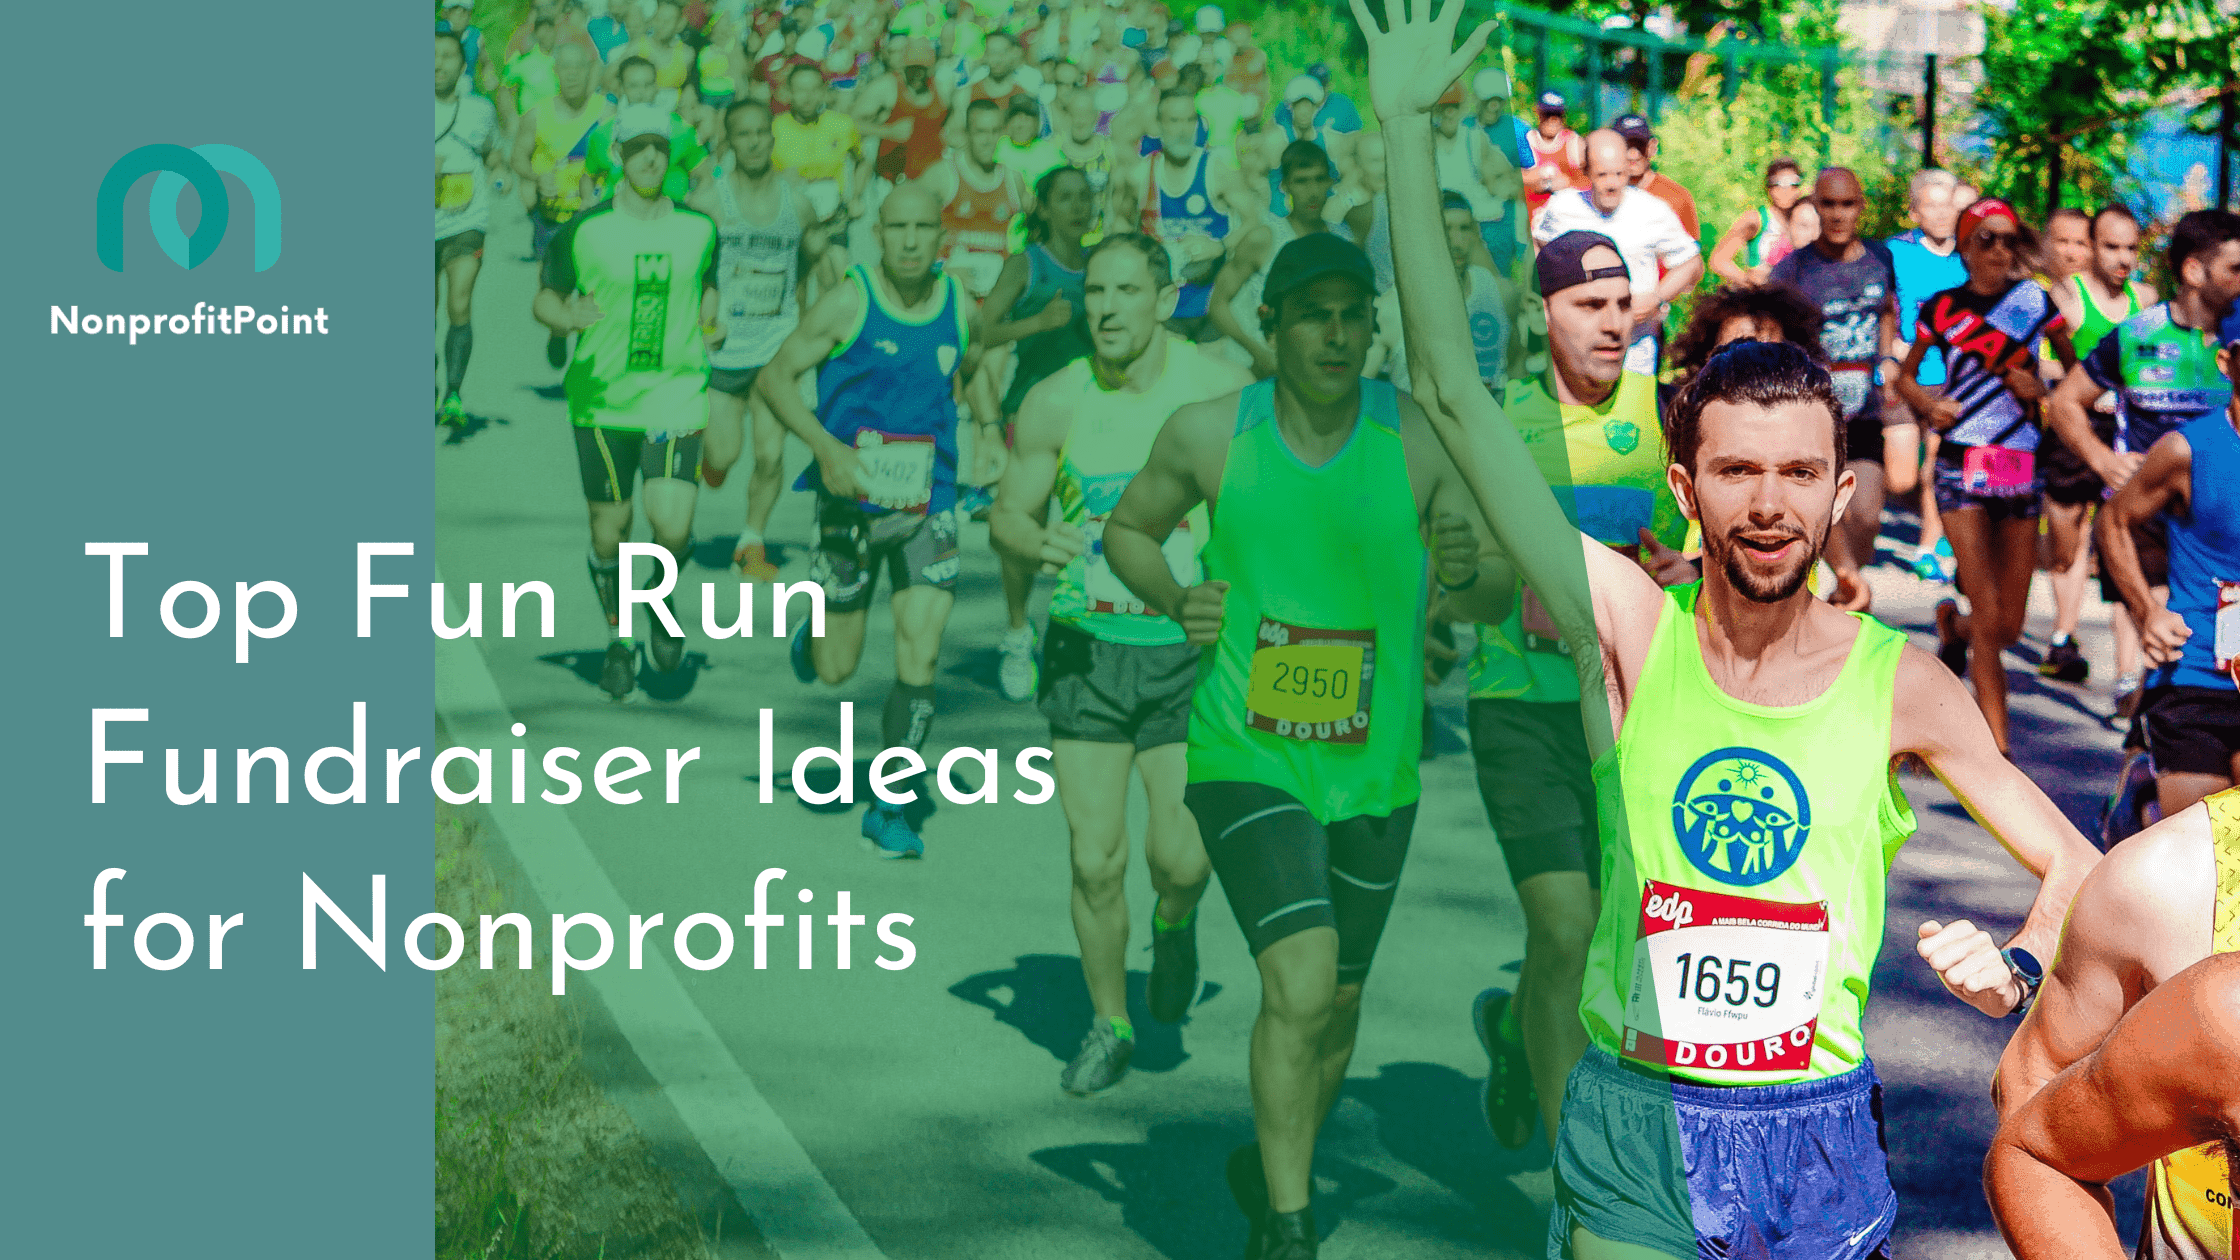 Top Fun Run Fundraiser Ideas for Nonprofits